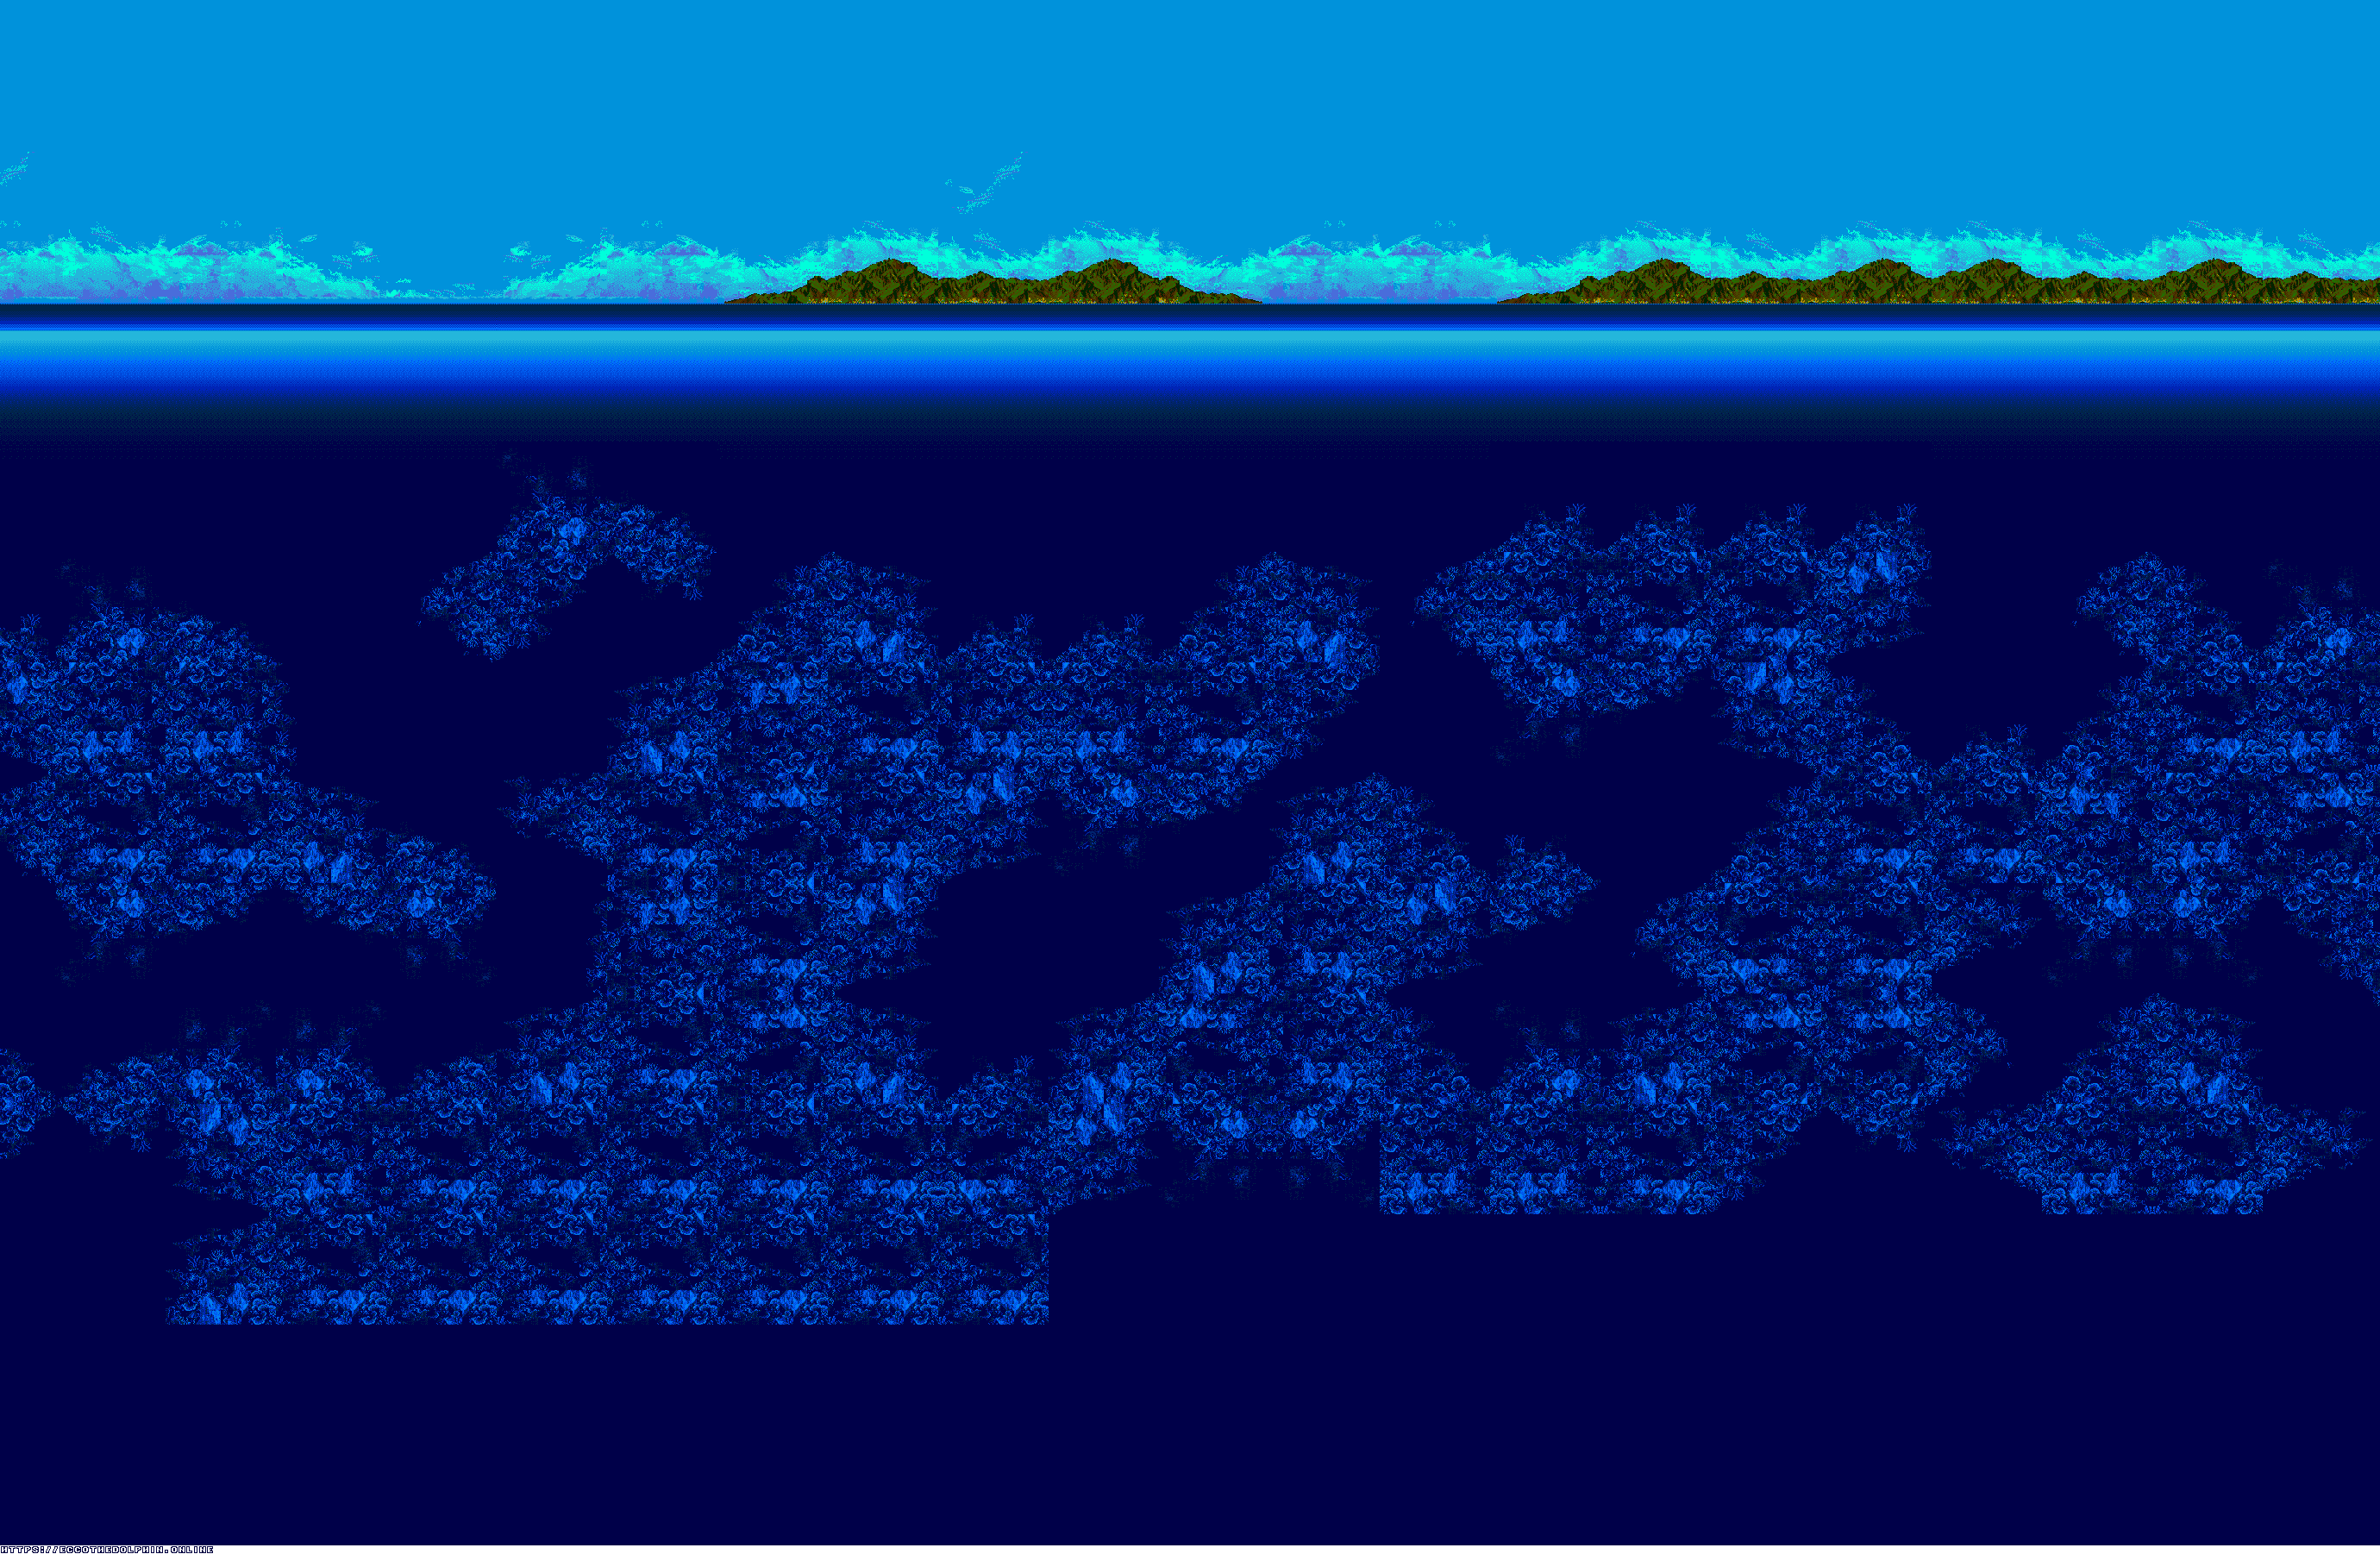 Octopus Passage (Background)